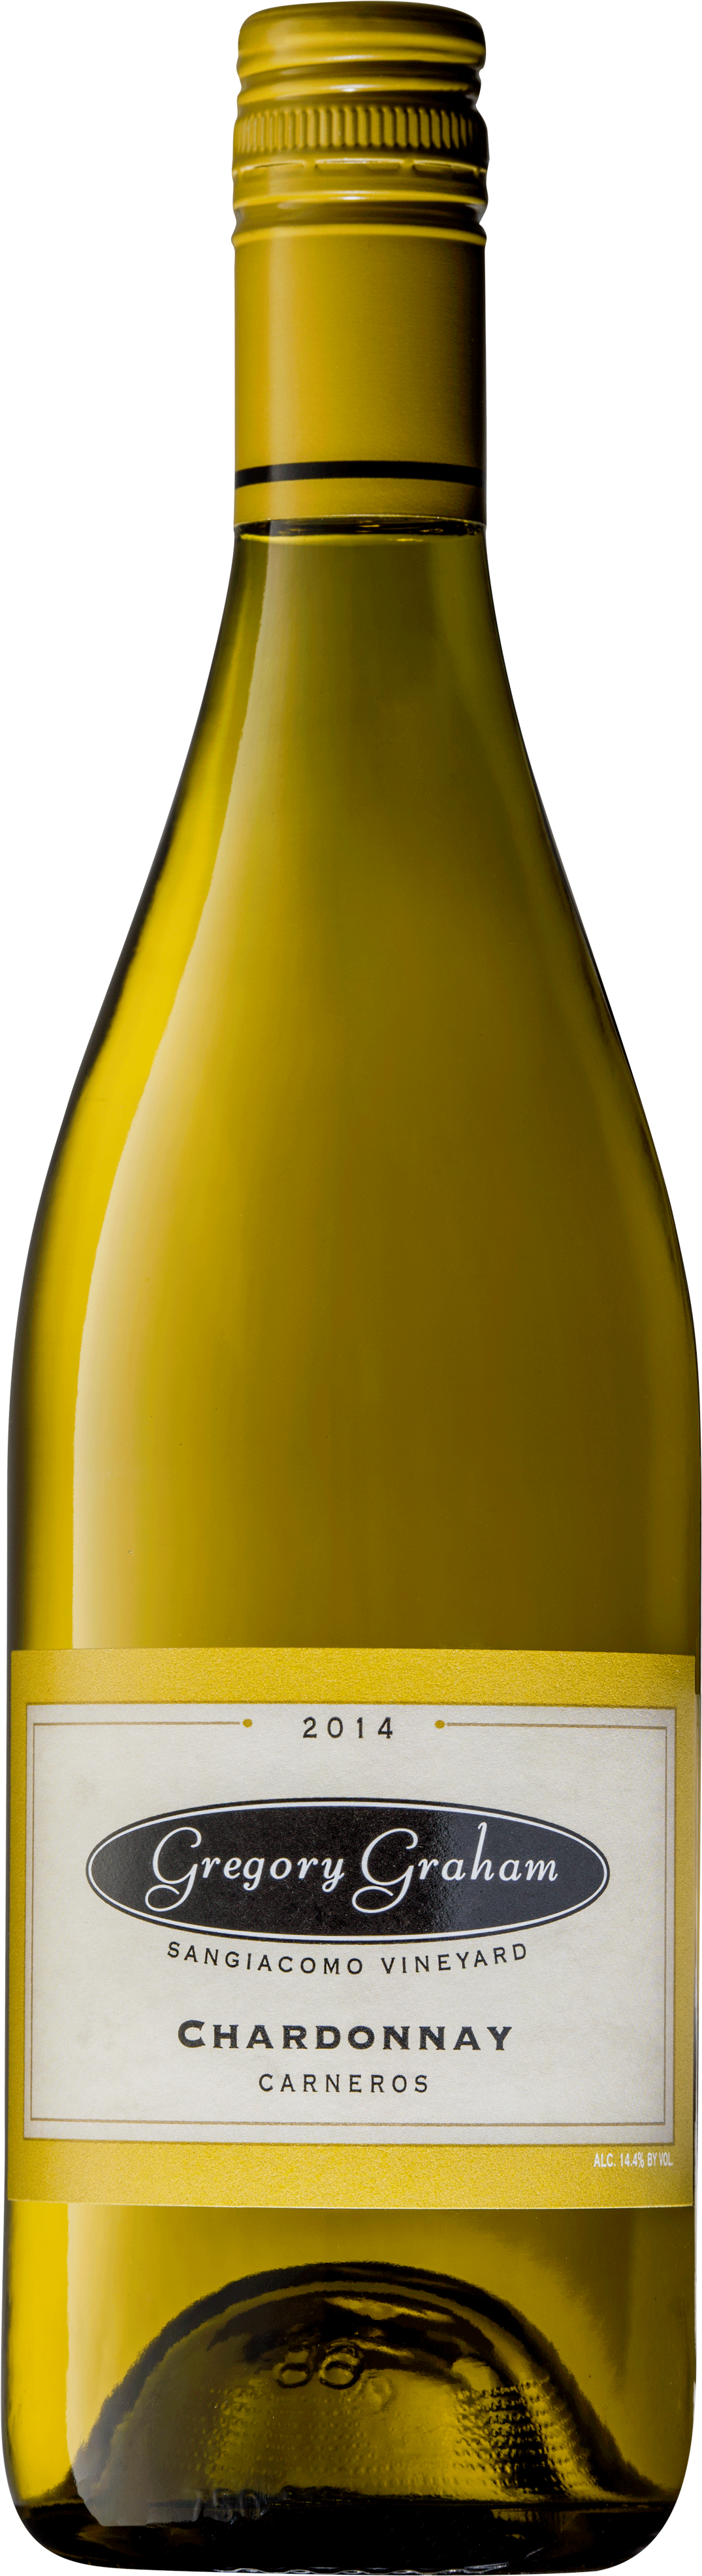 Product Image for 2022 Carneros Chardonnay (Sangiacomo Vineyard)